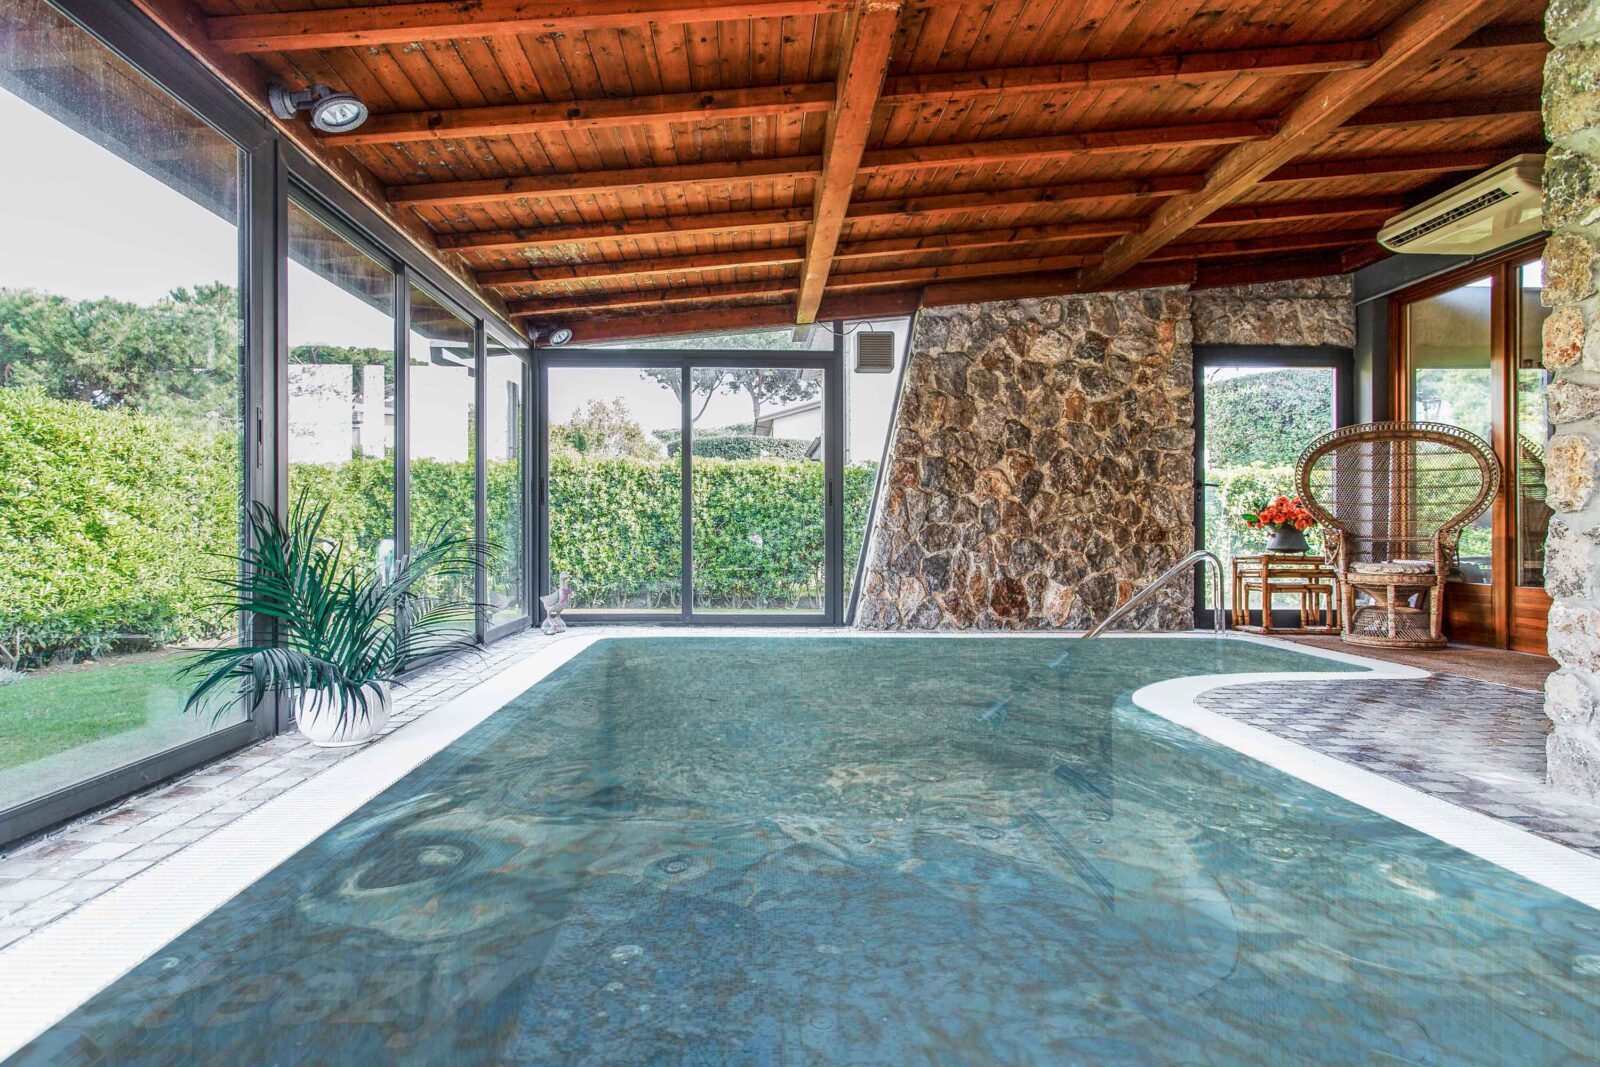 Villa for Sale in Forte dei Marmi with Wonderful Indoor Pool: Luxury ...